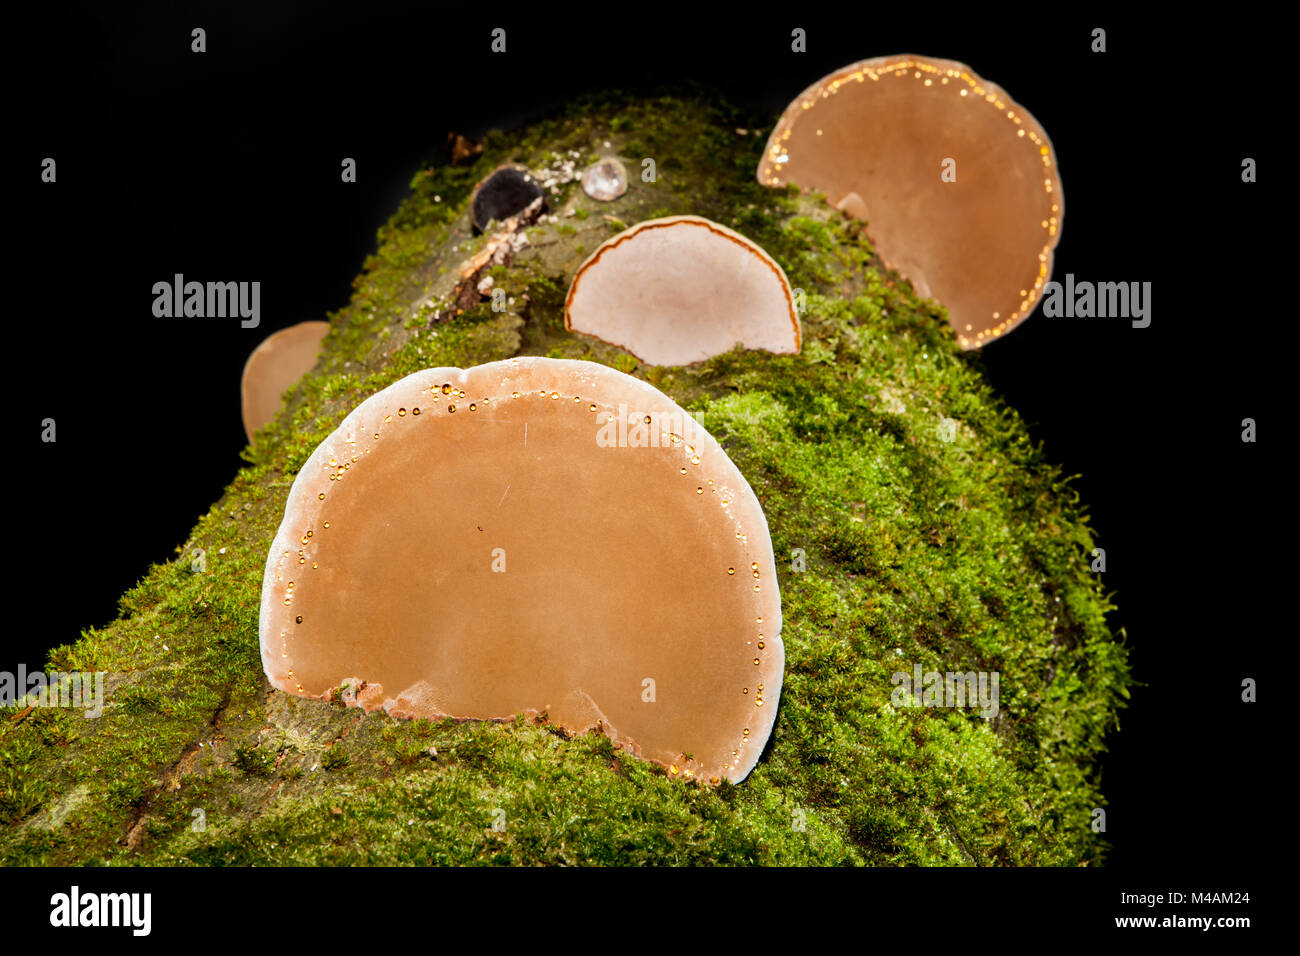 tinder fungus, Fomes fomentarius, Stock Photo